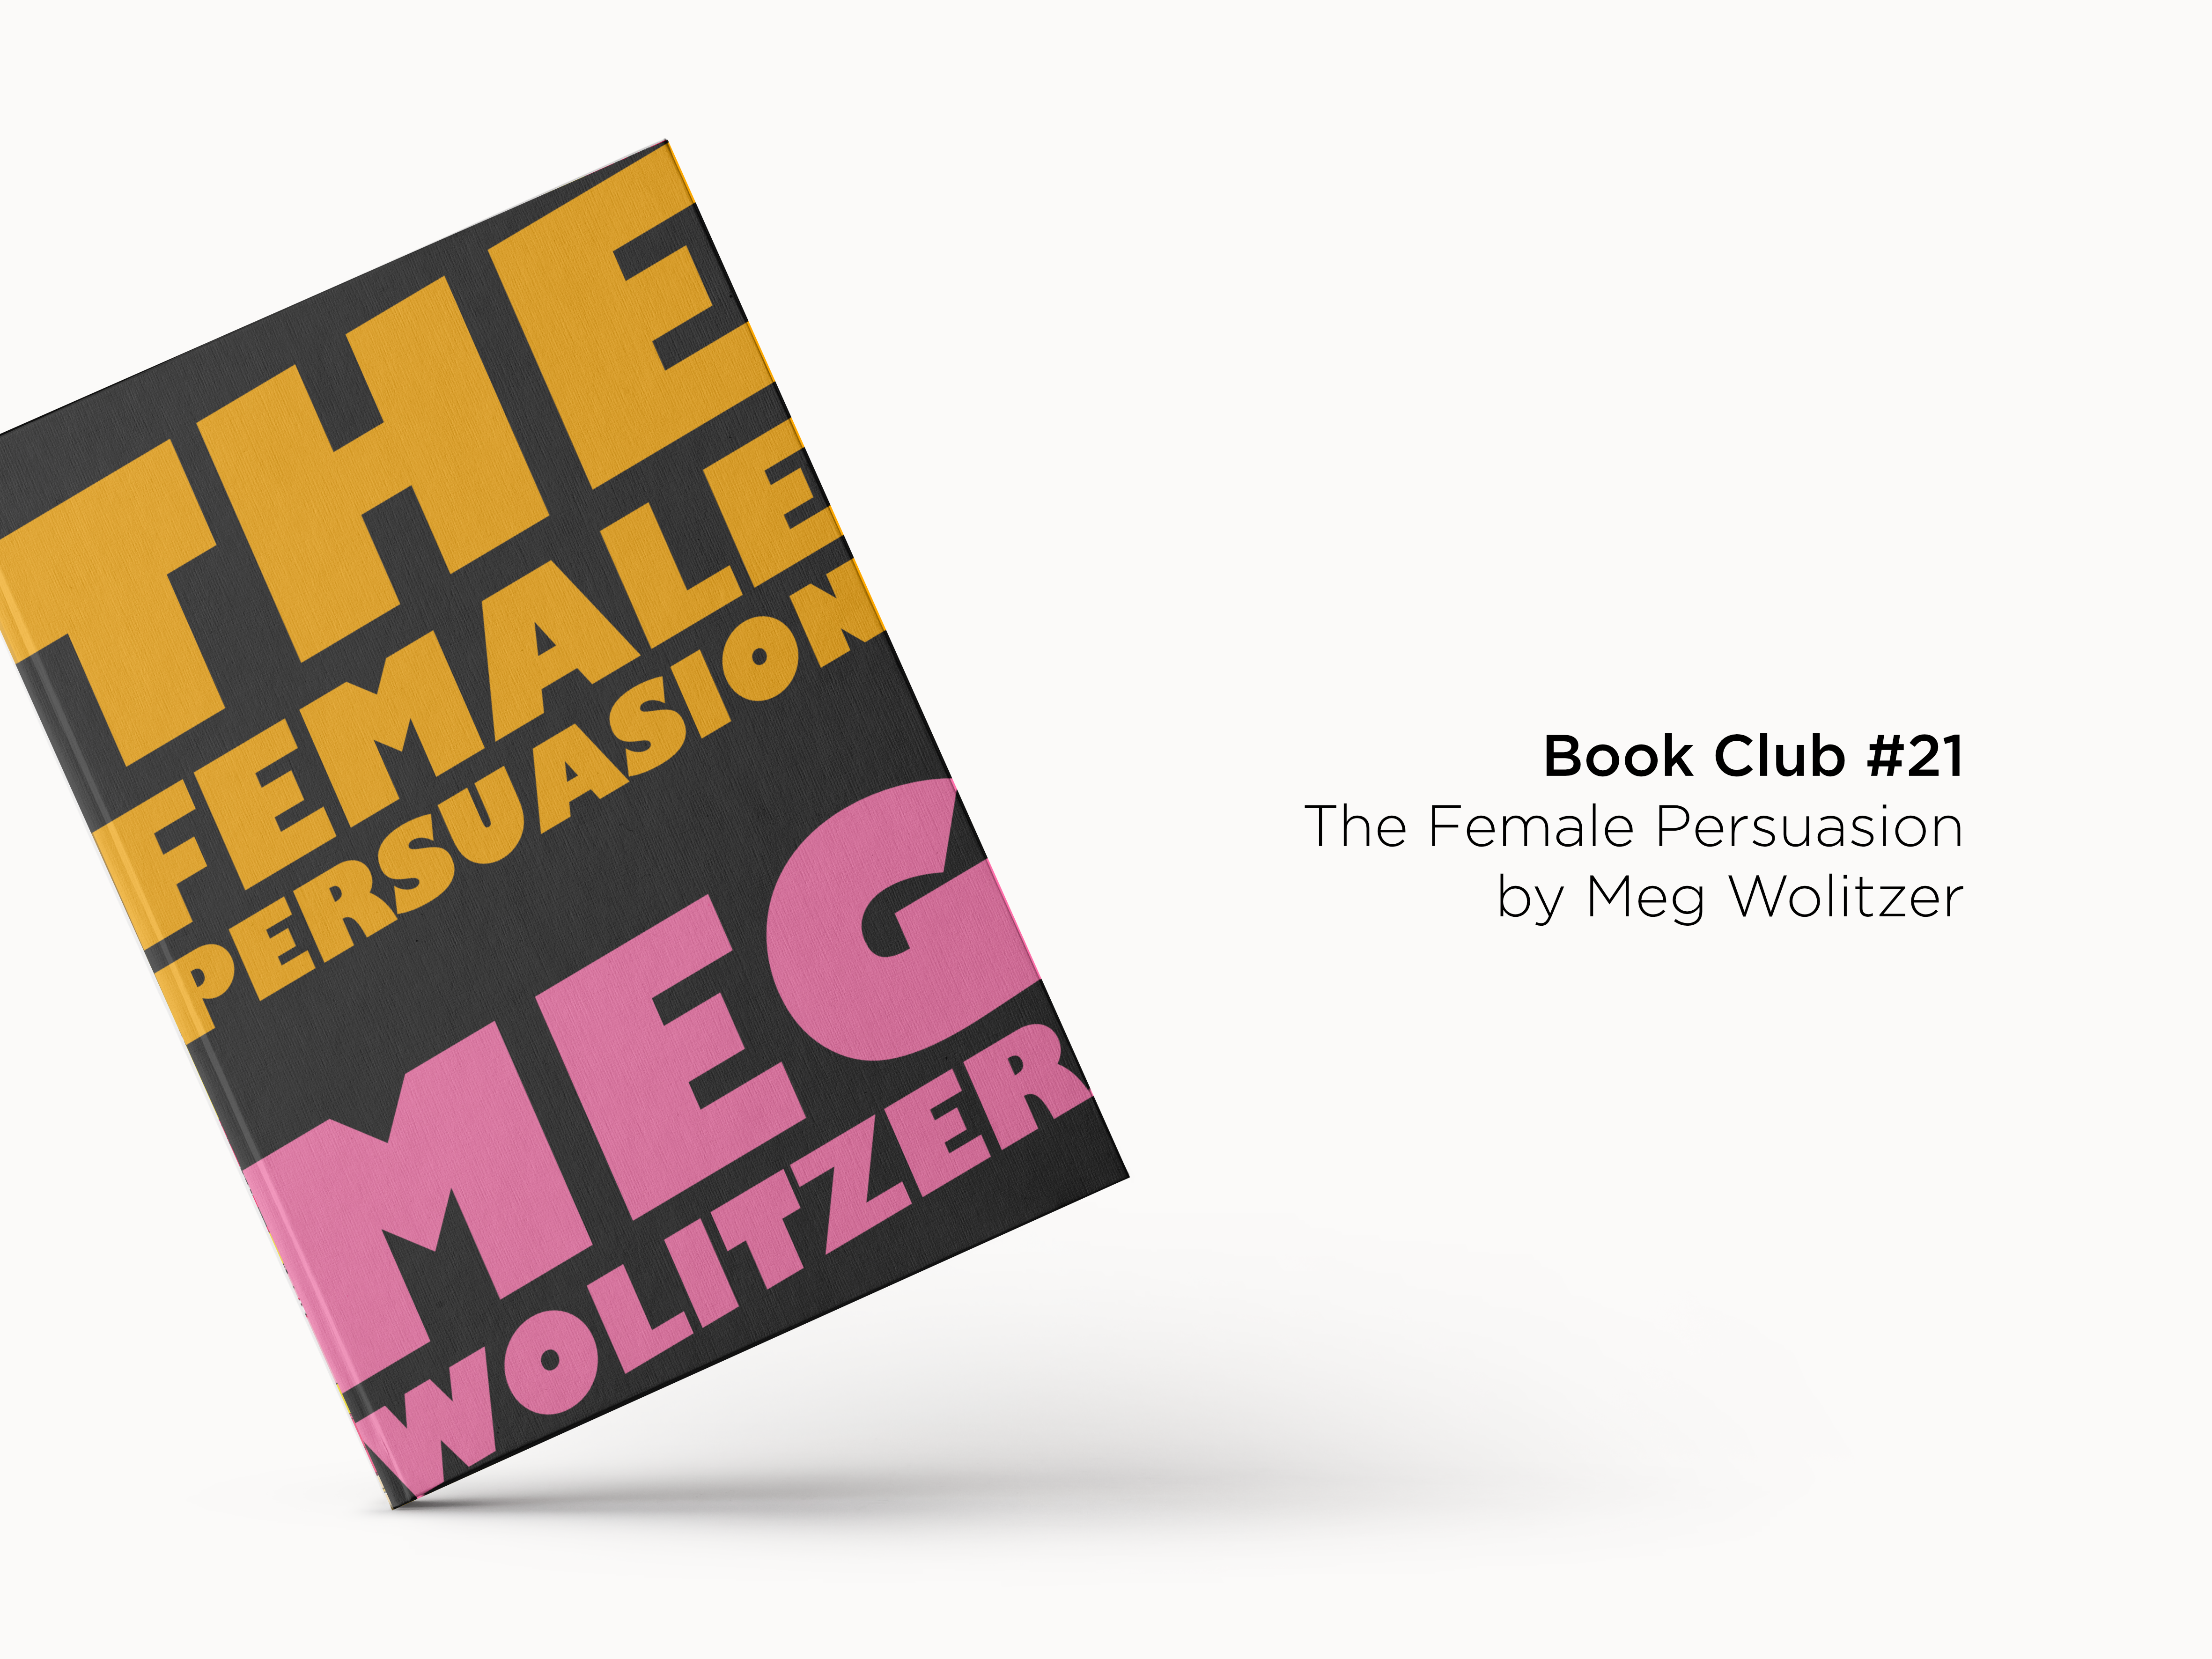 Meg Wolitzer's The Female Persuasion cover design